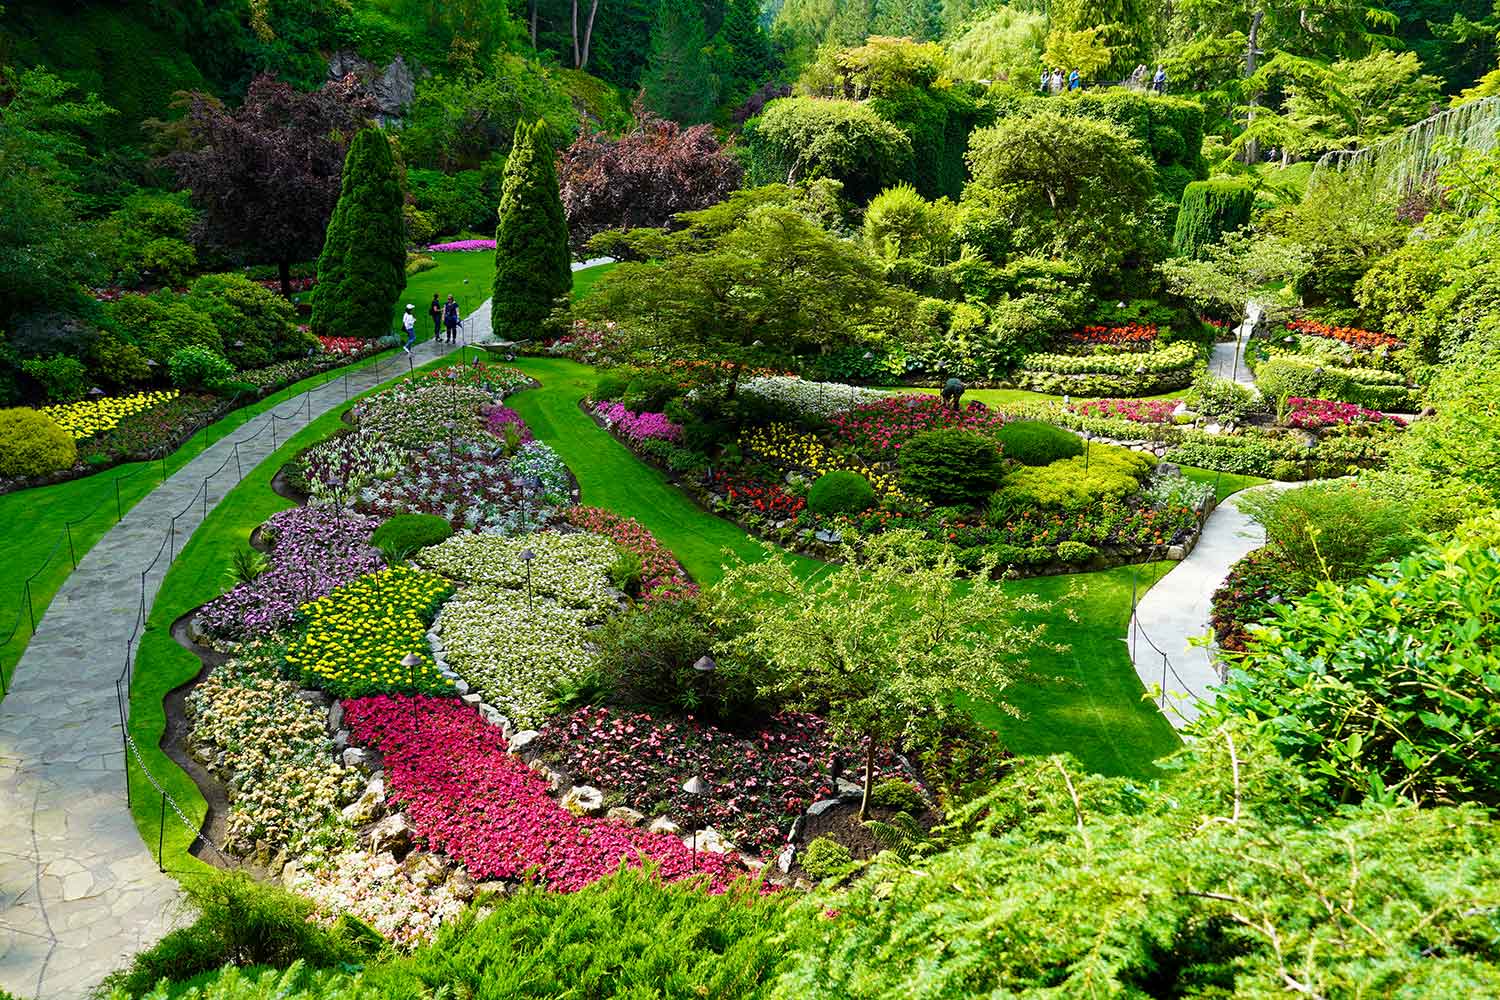 Sunken Garden in The Butchart Gardens, Victoria, Canada